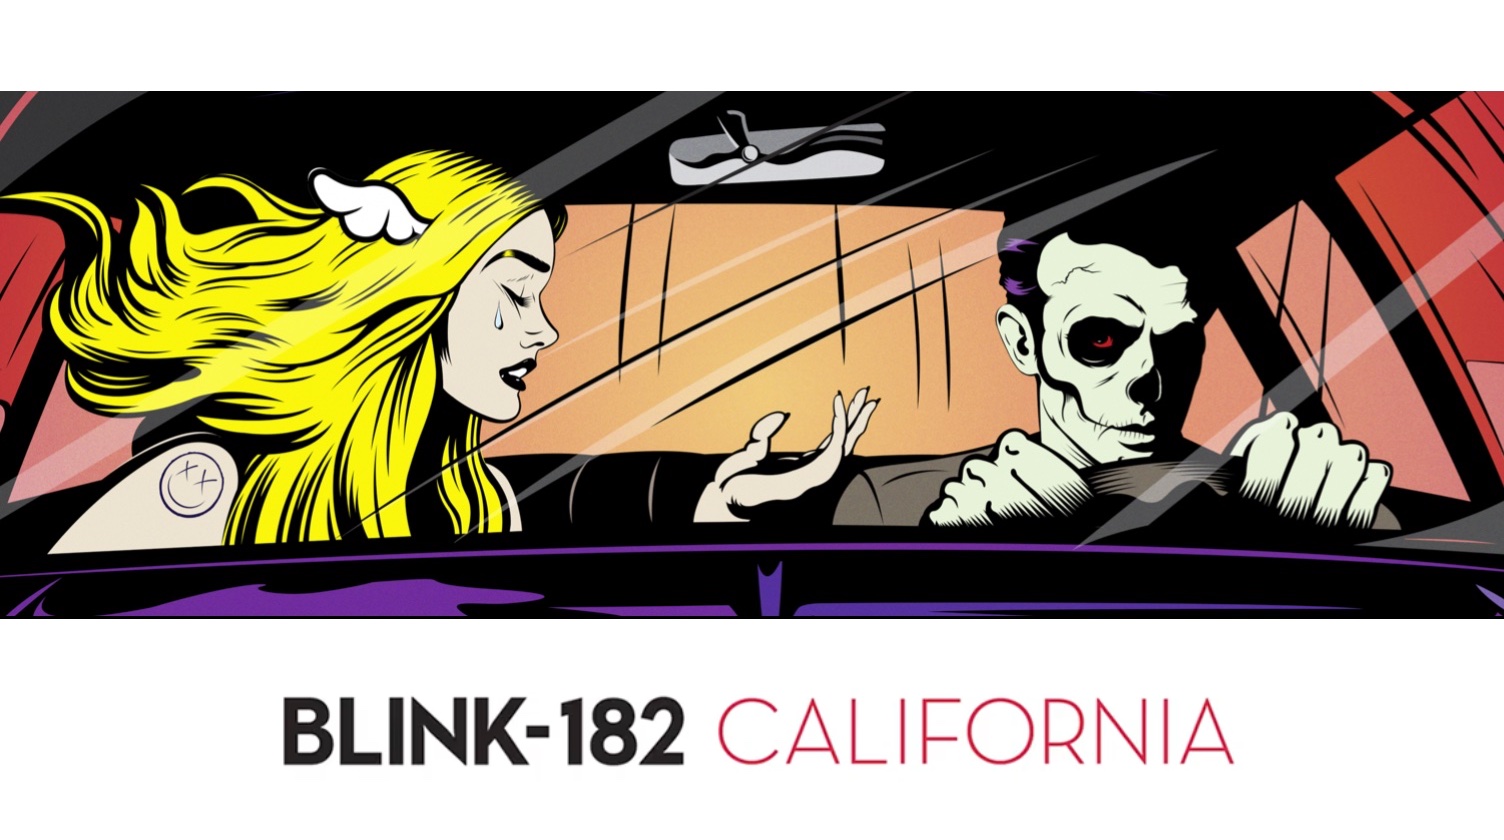 musique - blink-182 - California : critique de l'album blink cali